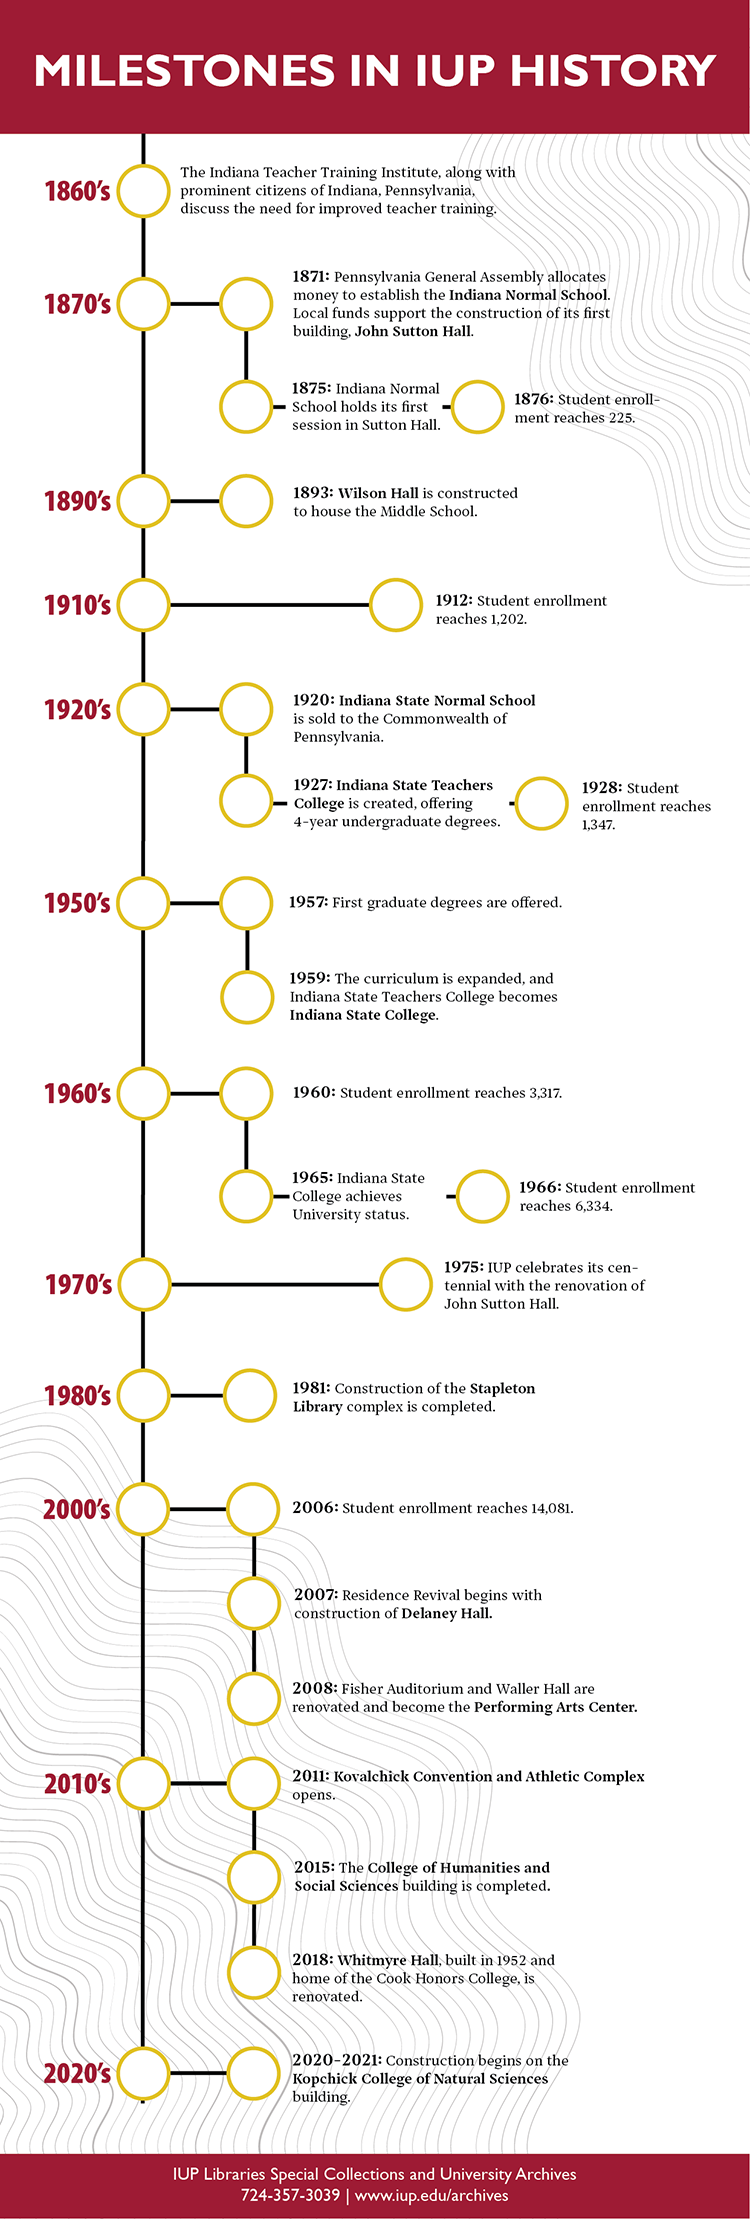 Milestones in IUP History Timeline Image